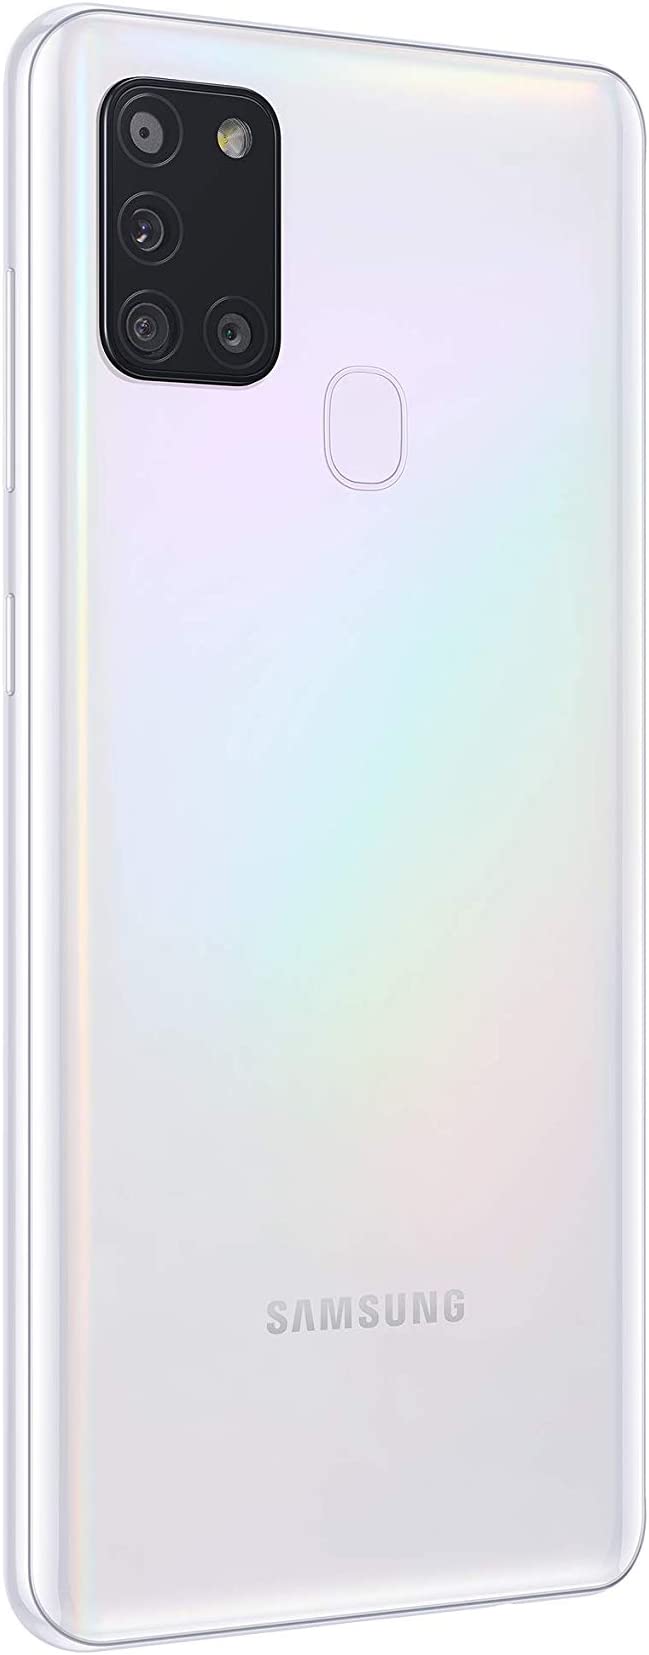 Samsung Galaxy A21s Dual SIM 64GB 4GB RAM 4G LTE (UAE Version) - Mystic White